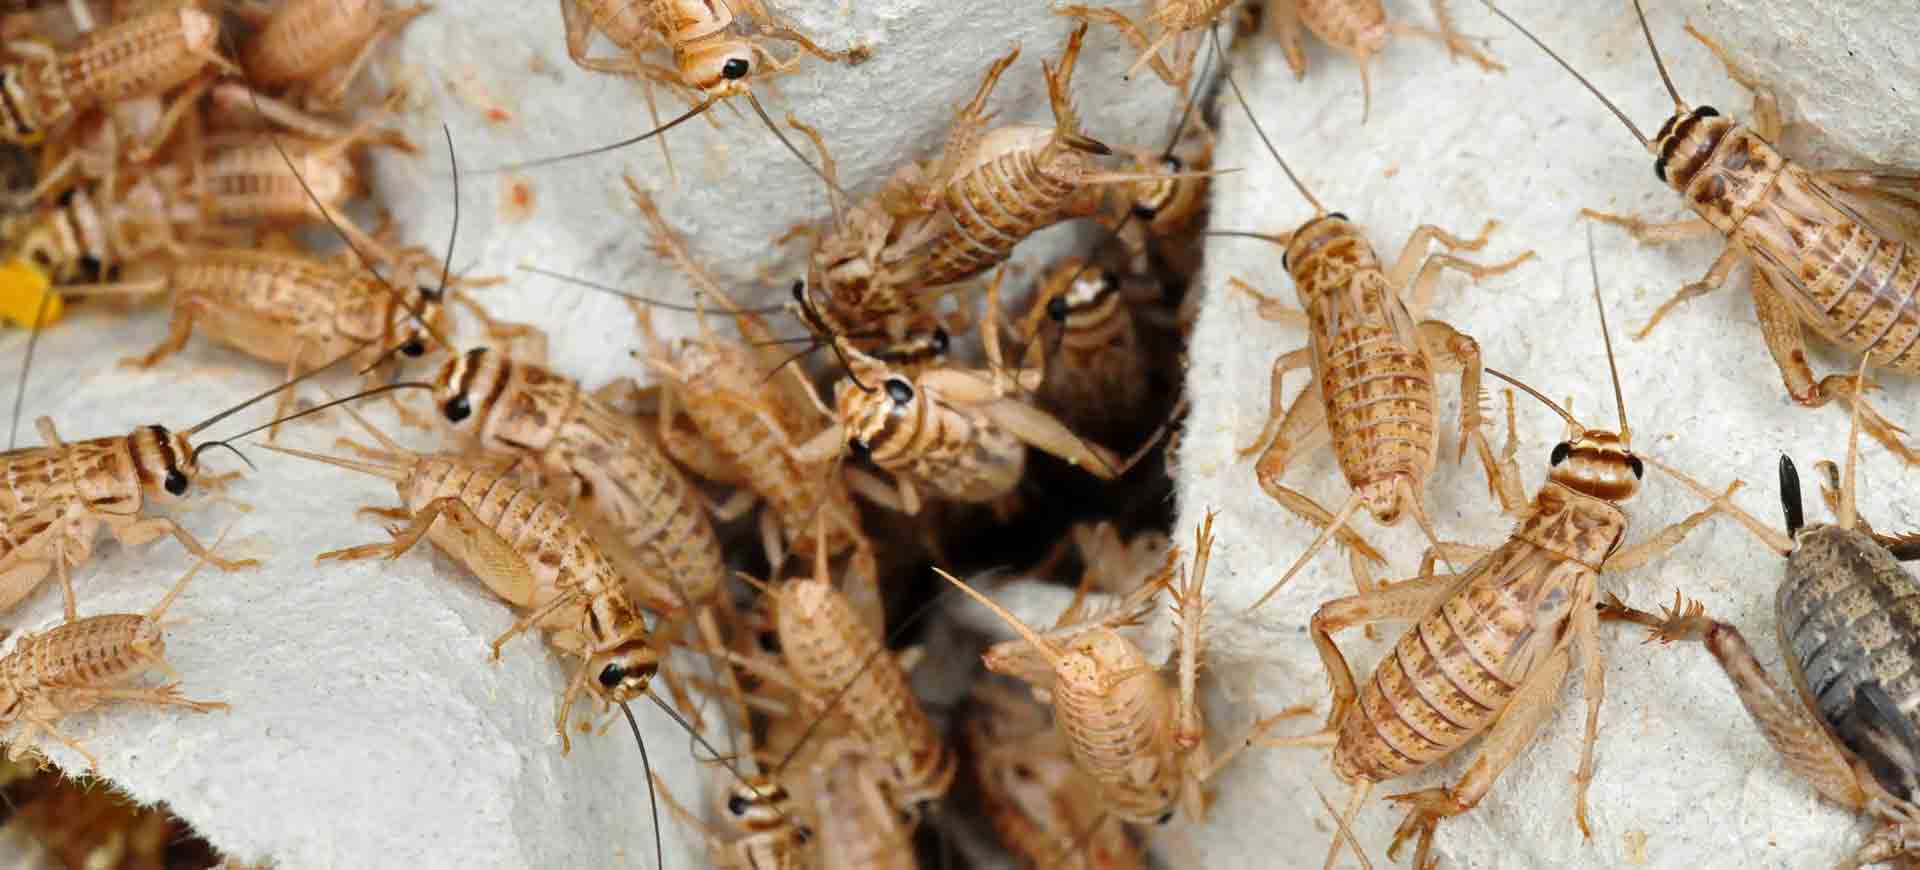 cricket pest control national city